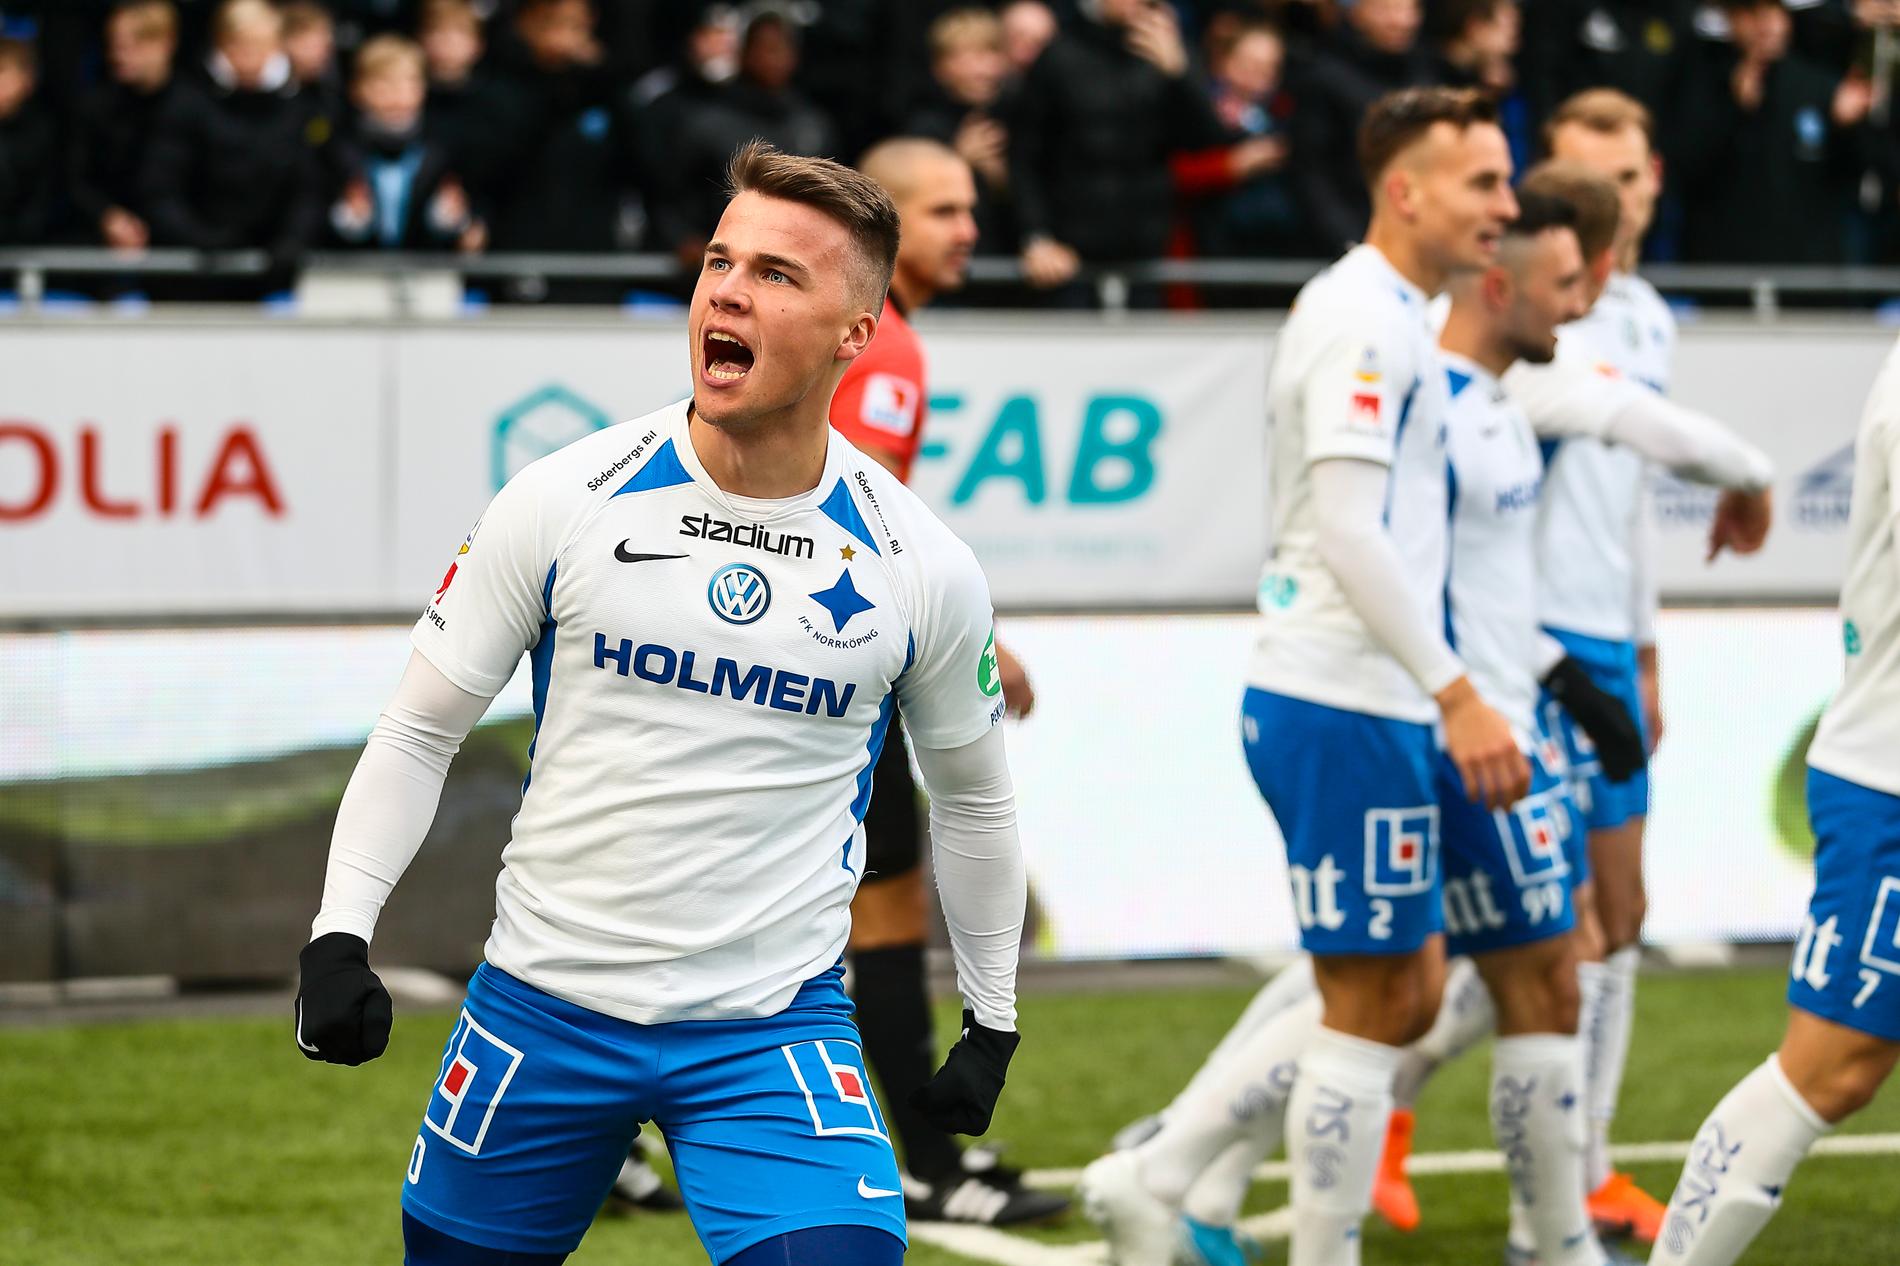 Simon Skrabb lämnar IFK Norrköping 